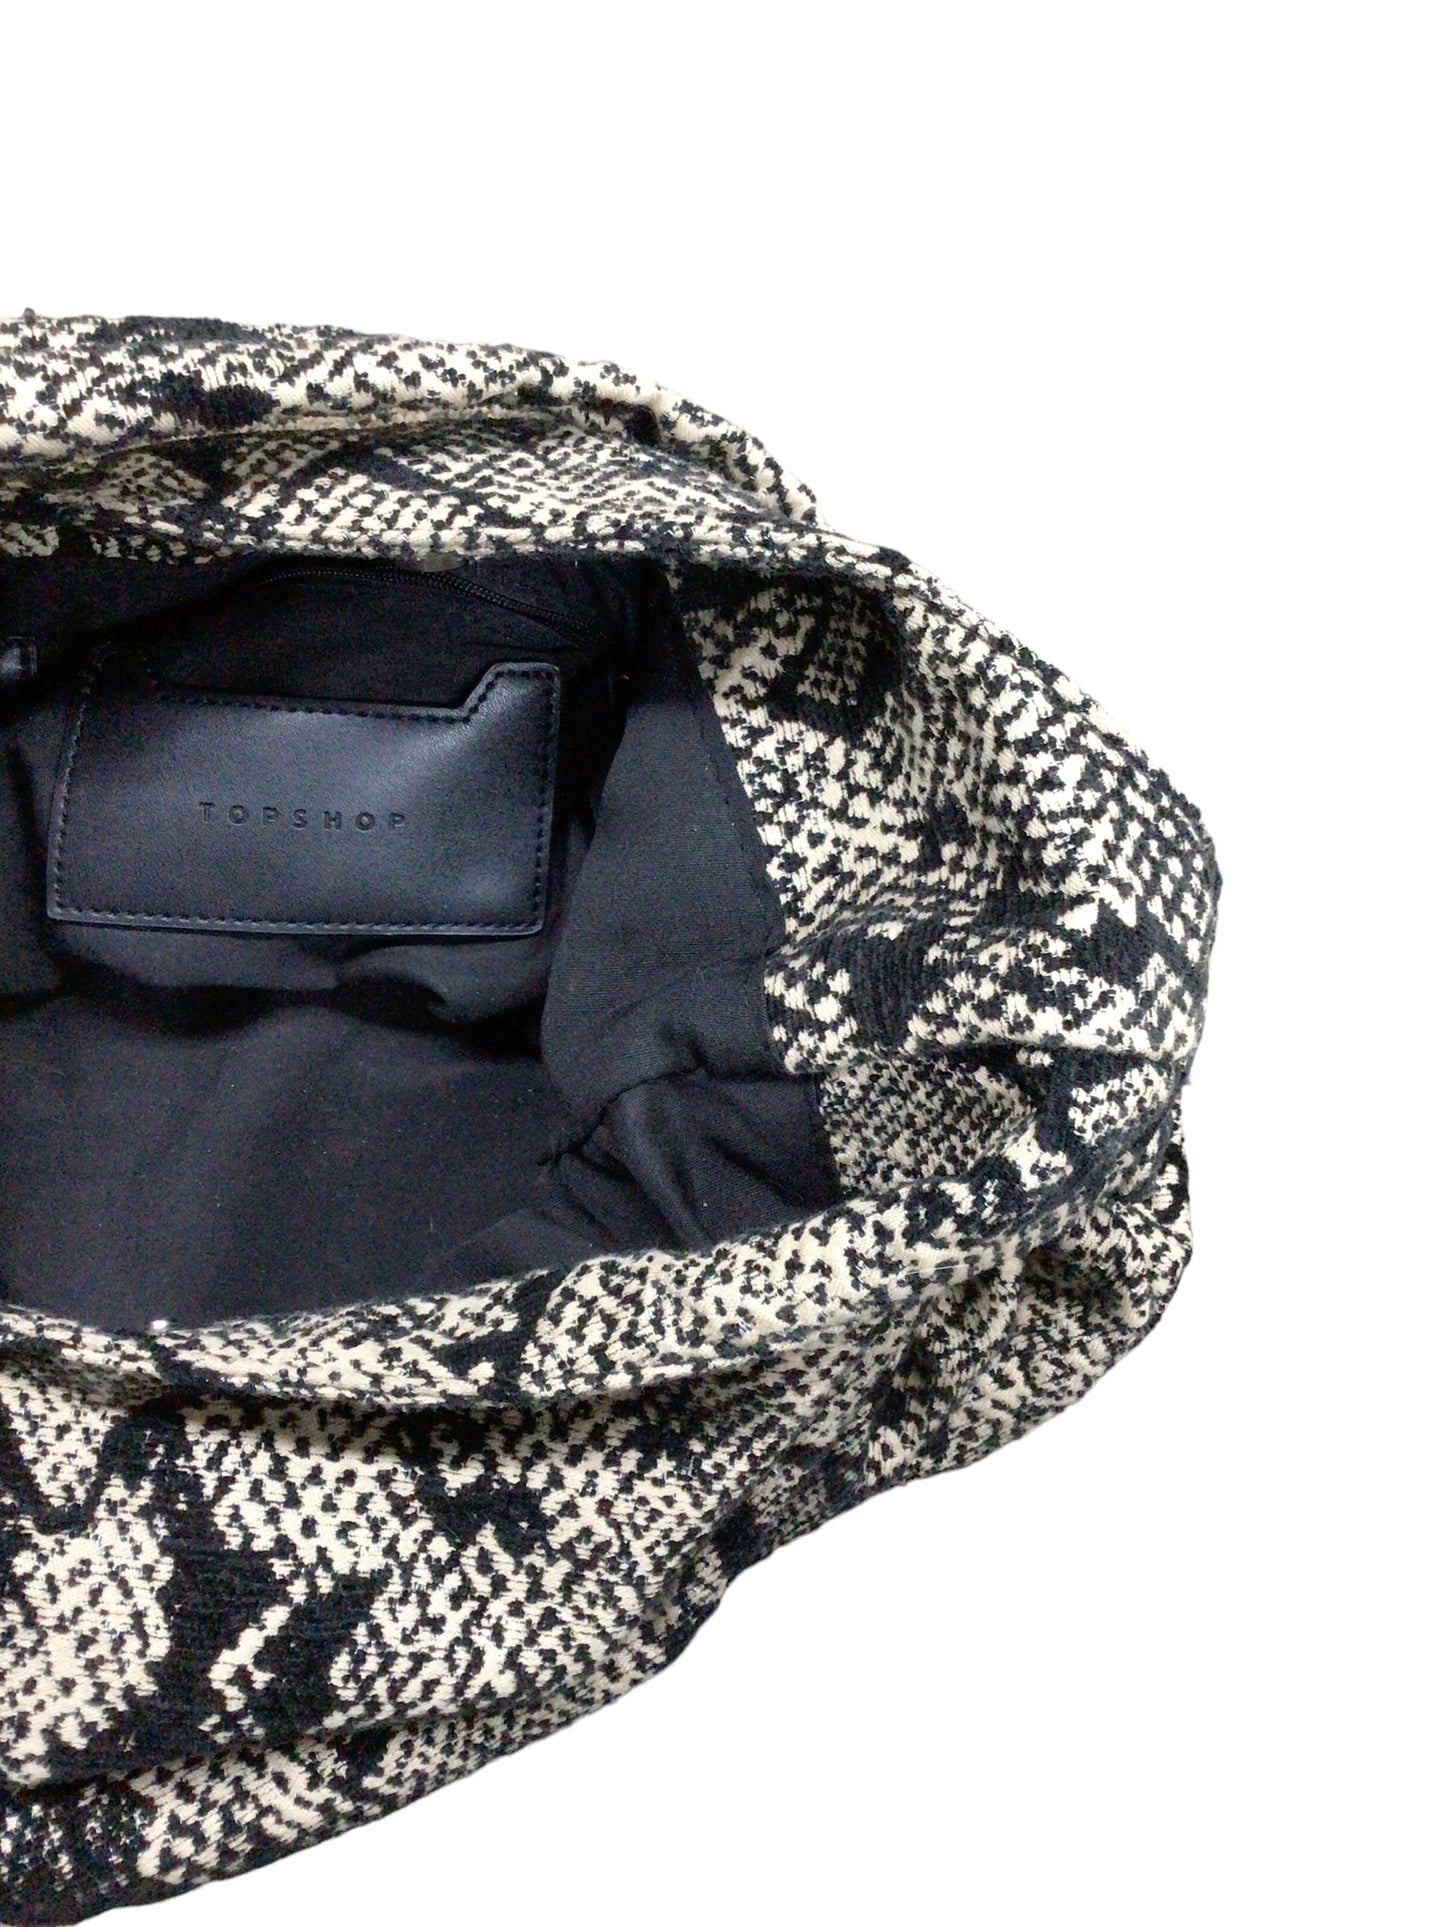 Handbag By Topshop  Size: Medium